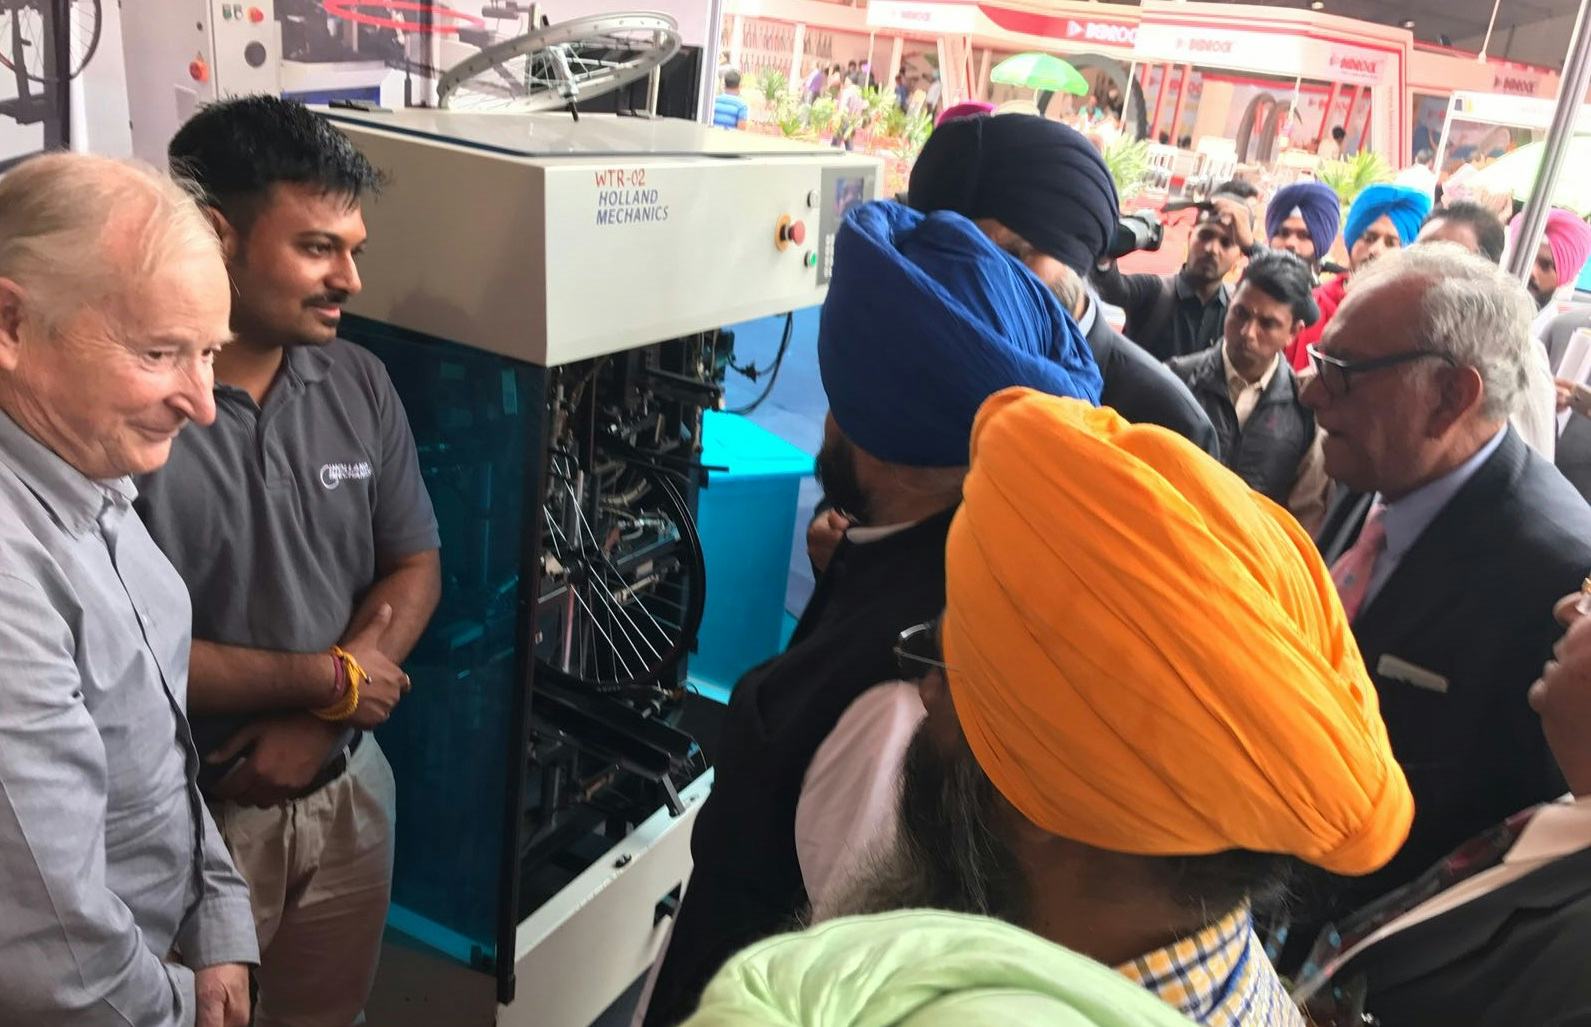 ‘Holland Mechanics machinery is now installed at all five major OEMs in India,’ says Jos van Doornik of Holland Mechanics. – Photo Satnam Singh